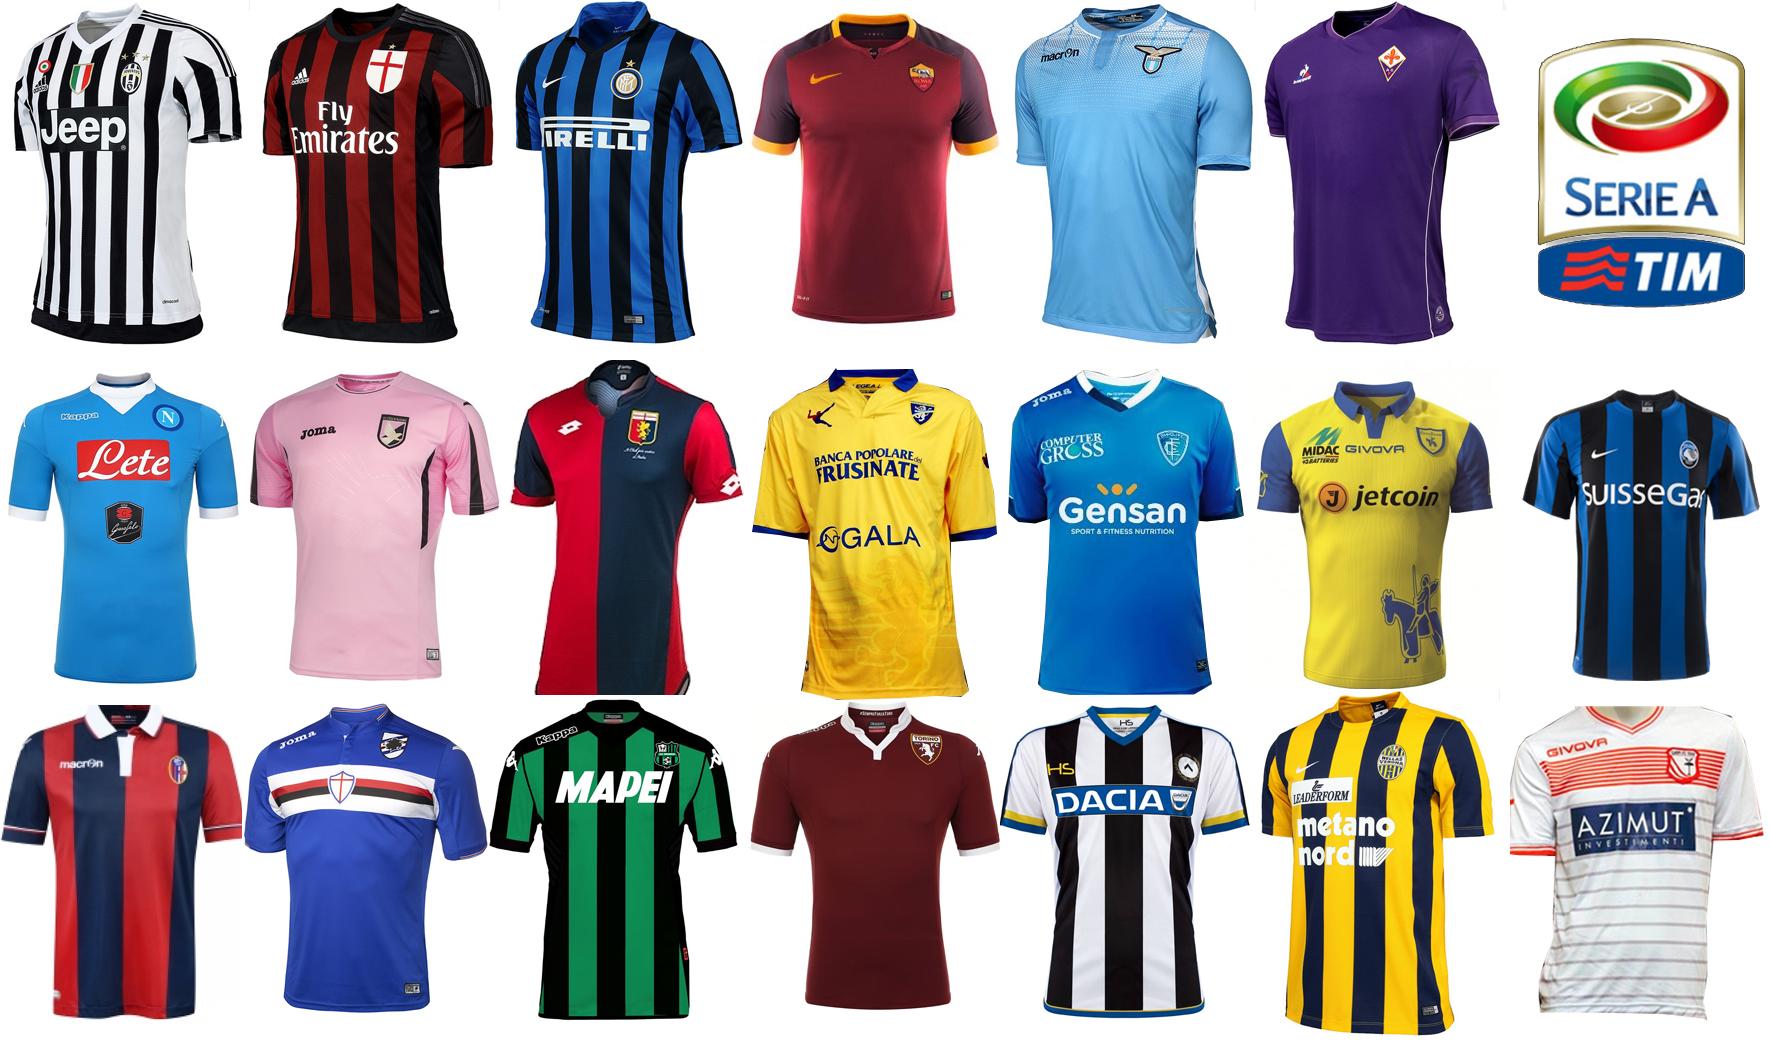 Todo Sobre Camisetas på Twitter: las camisetas de la Serie A que se han sido presentadas. son las mejores? http://t.co/O0IaQE7jB6 http://t.co/MN5rarQFki" / Twitter